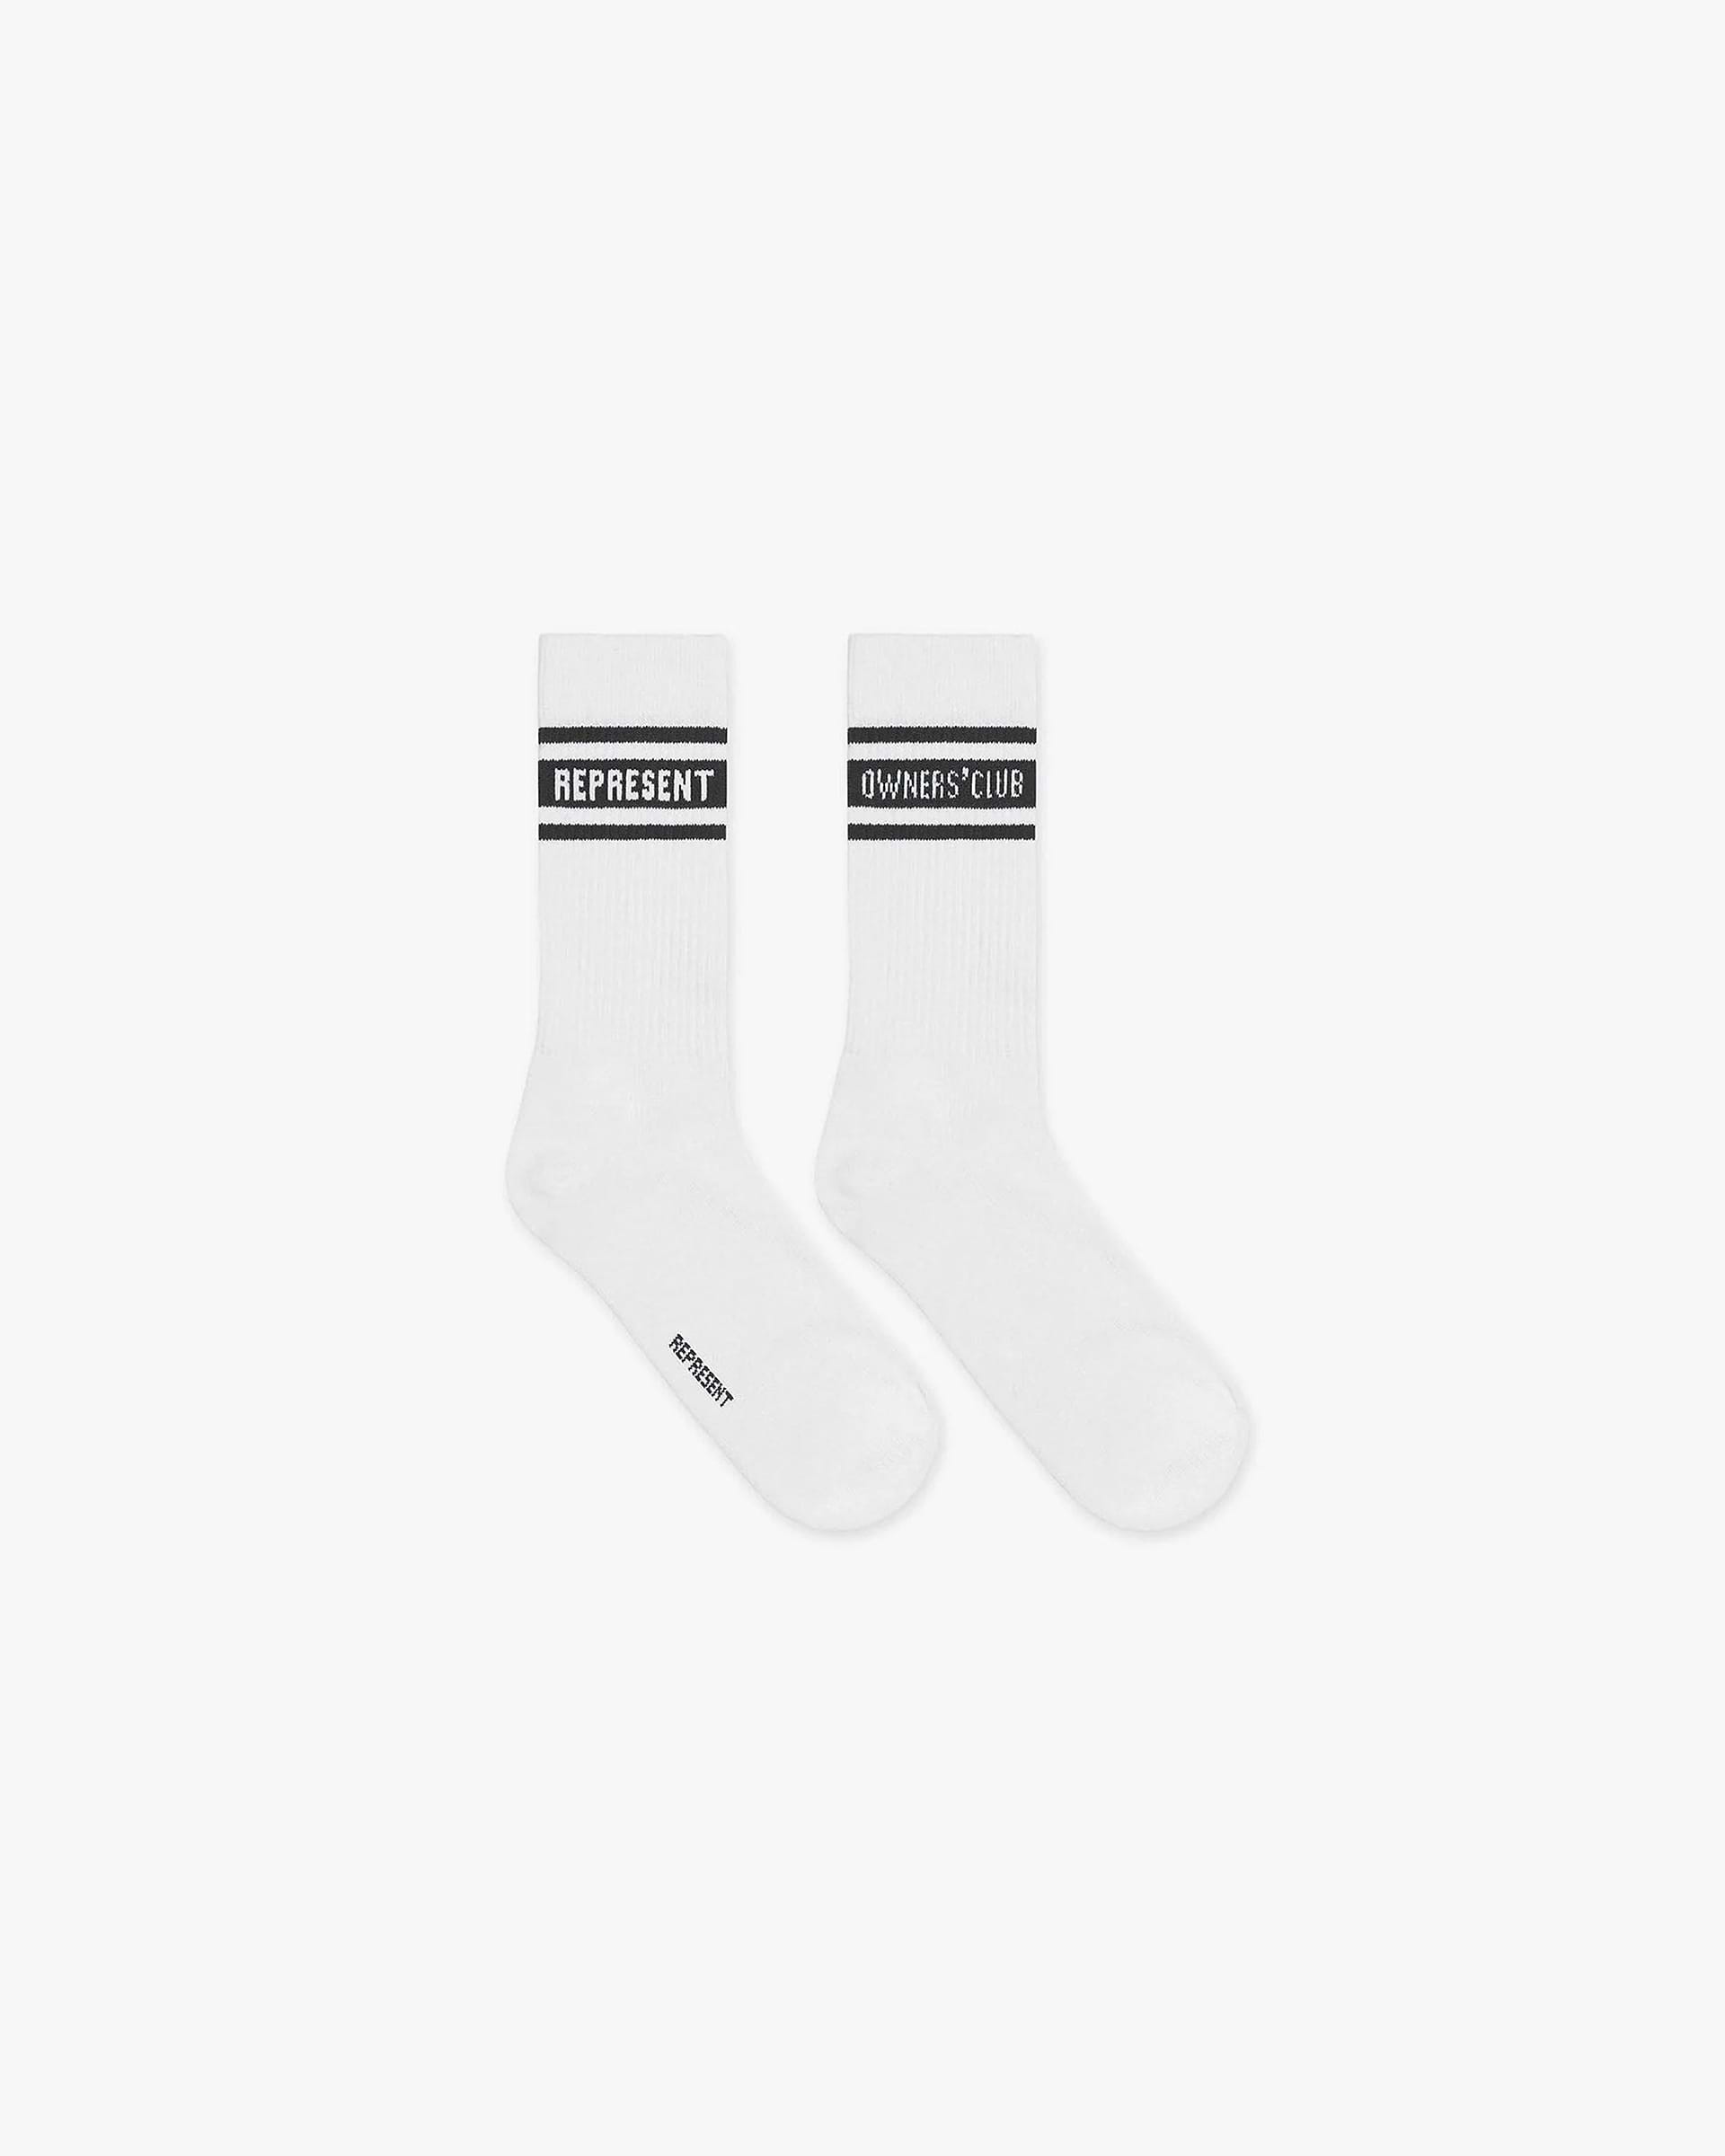 Represent Owners Club Socks | Flat White Black Accessories | REPRESENT CLO